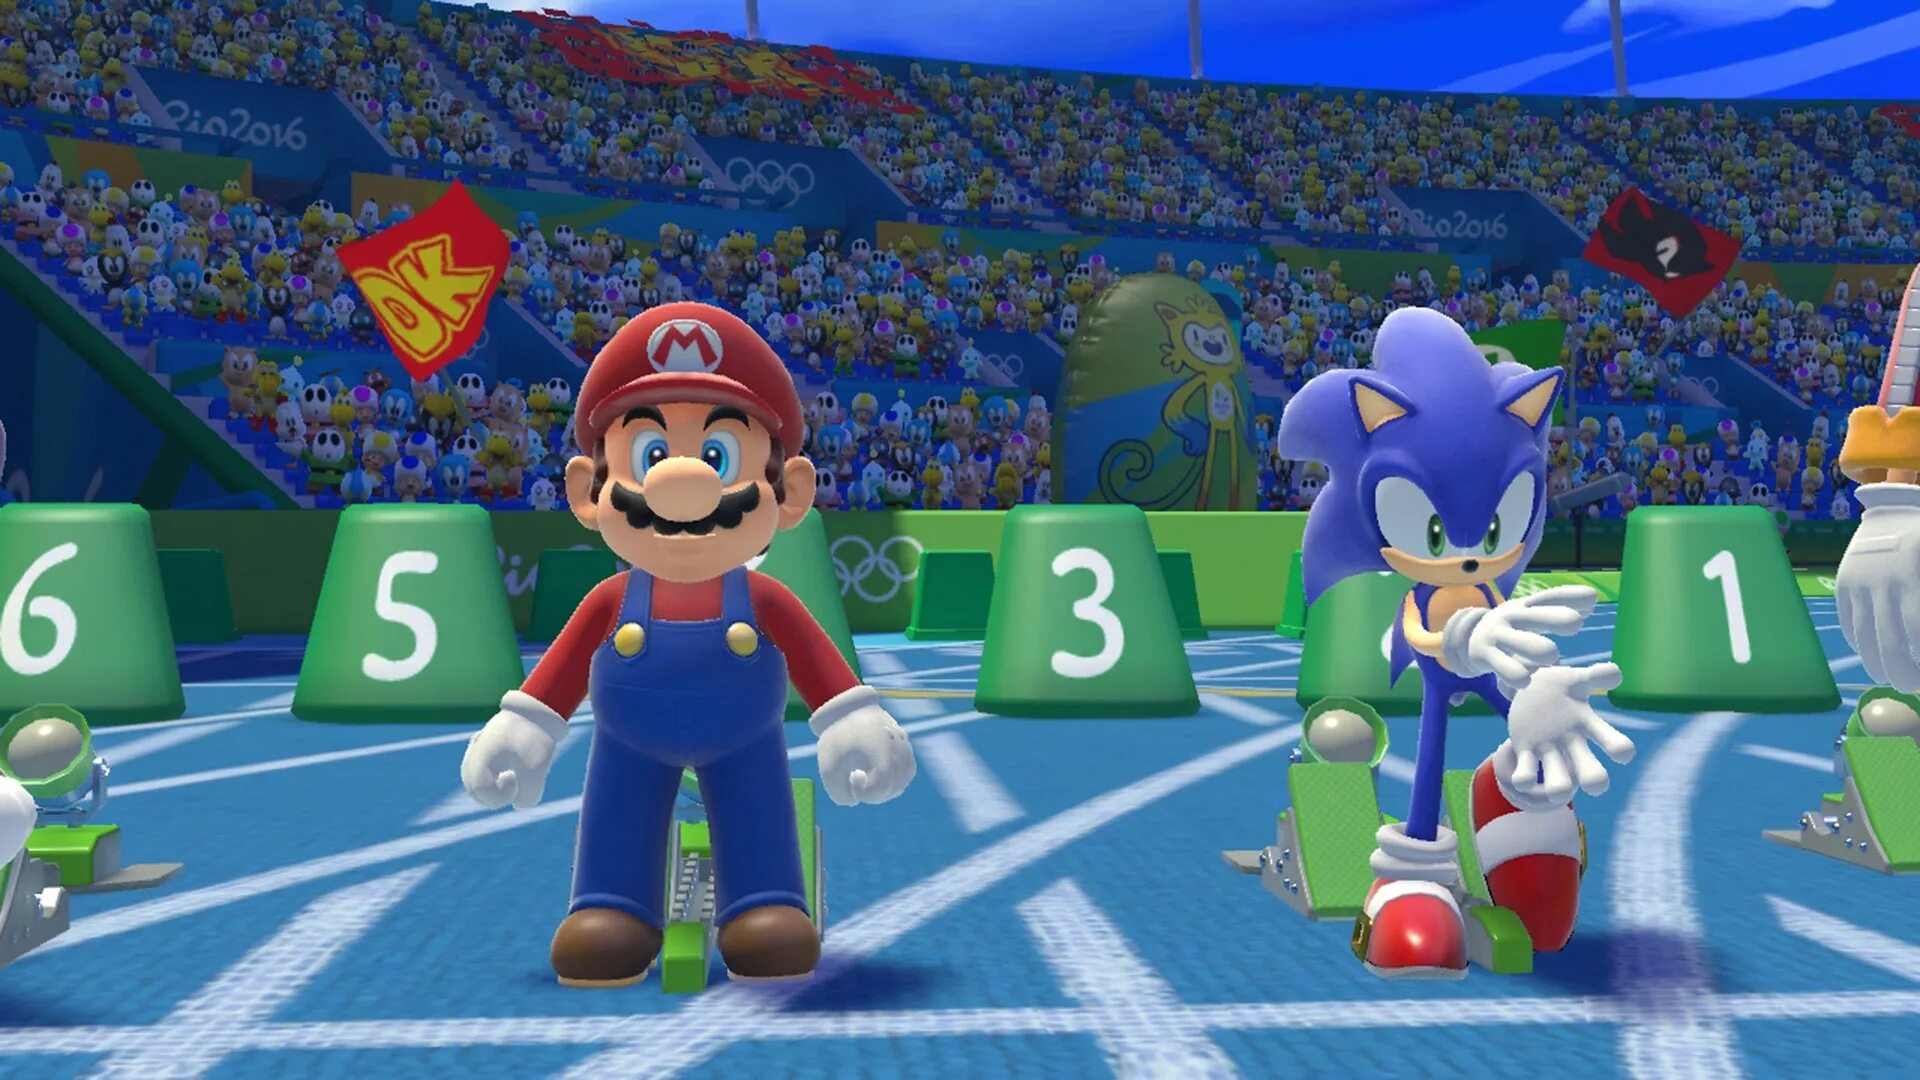 Mario & Sonic at the Olympic games. Mario & Sonic at the Rio 2016 Olympic games. Марио и Соник на Олимпийских играх 2016. Марио и Соник на Олимпийских играх 2016 в Рио. Олимпийский марио и соник